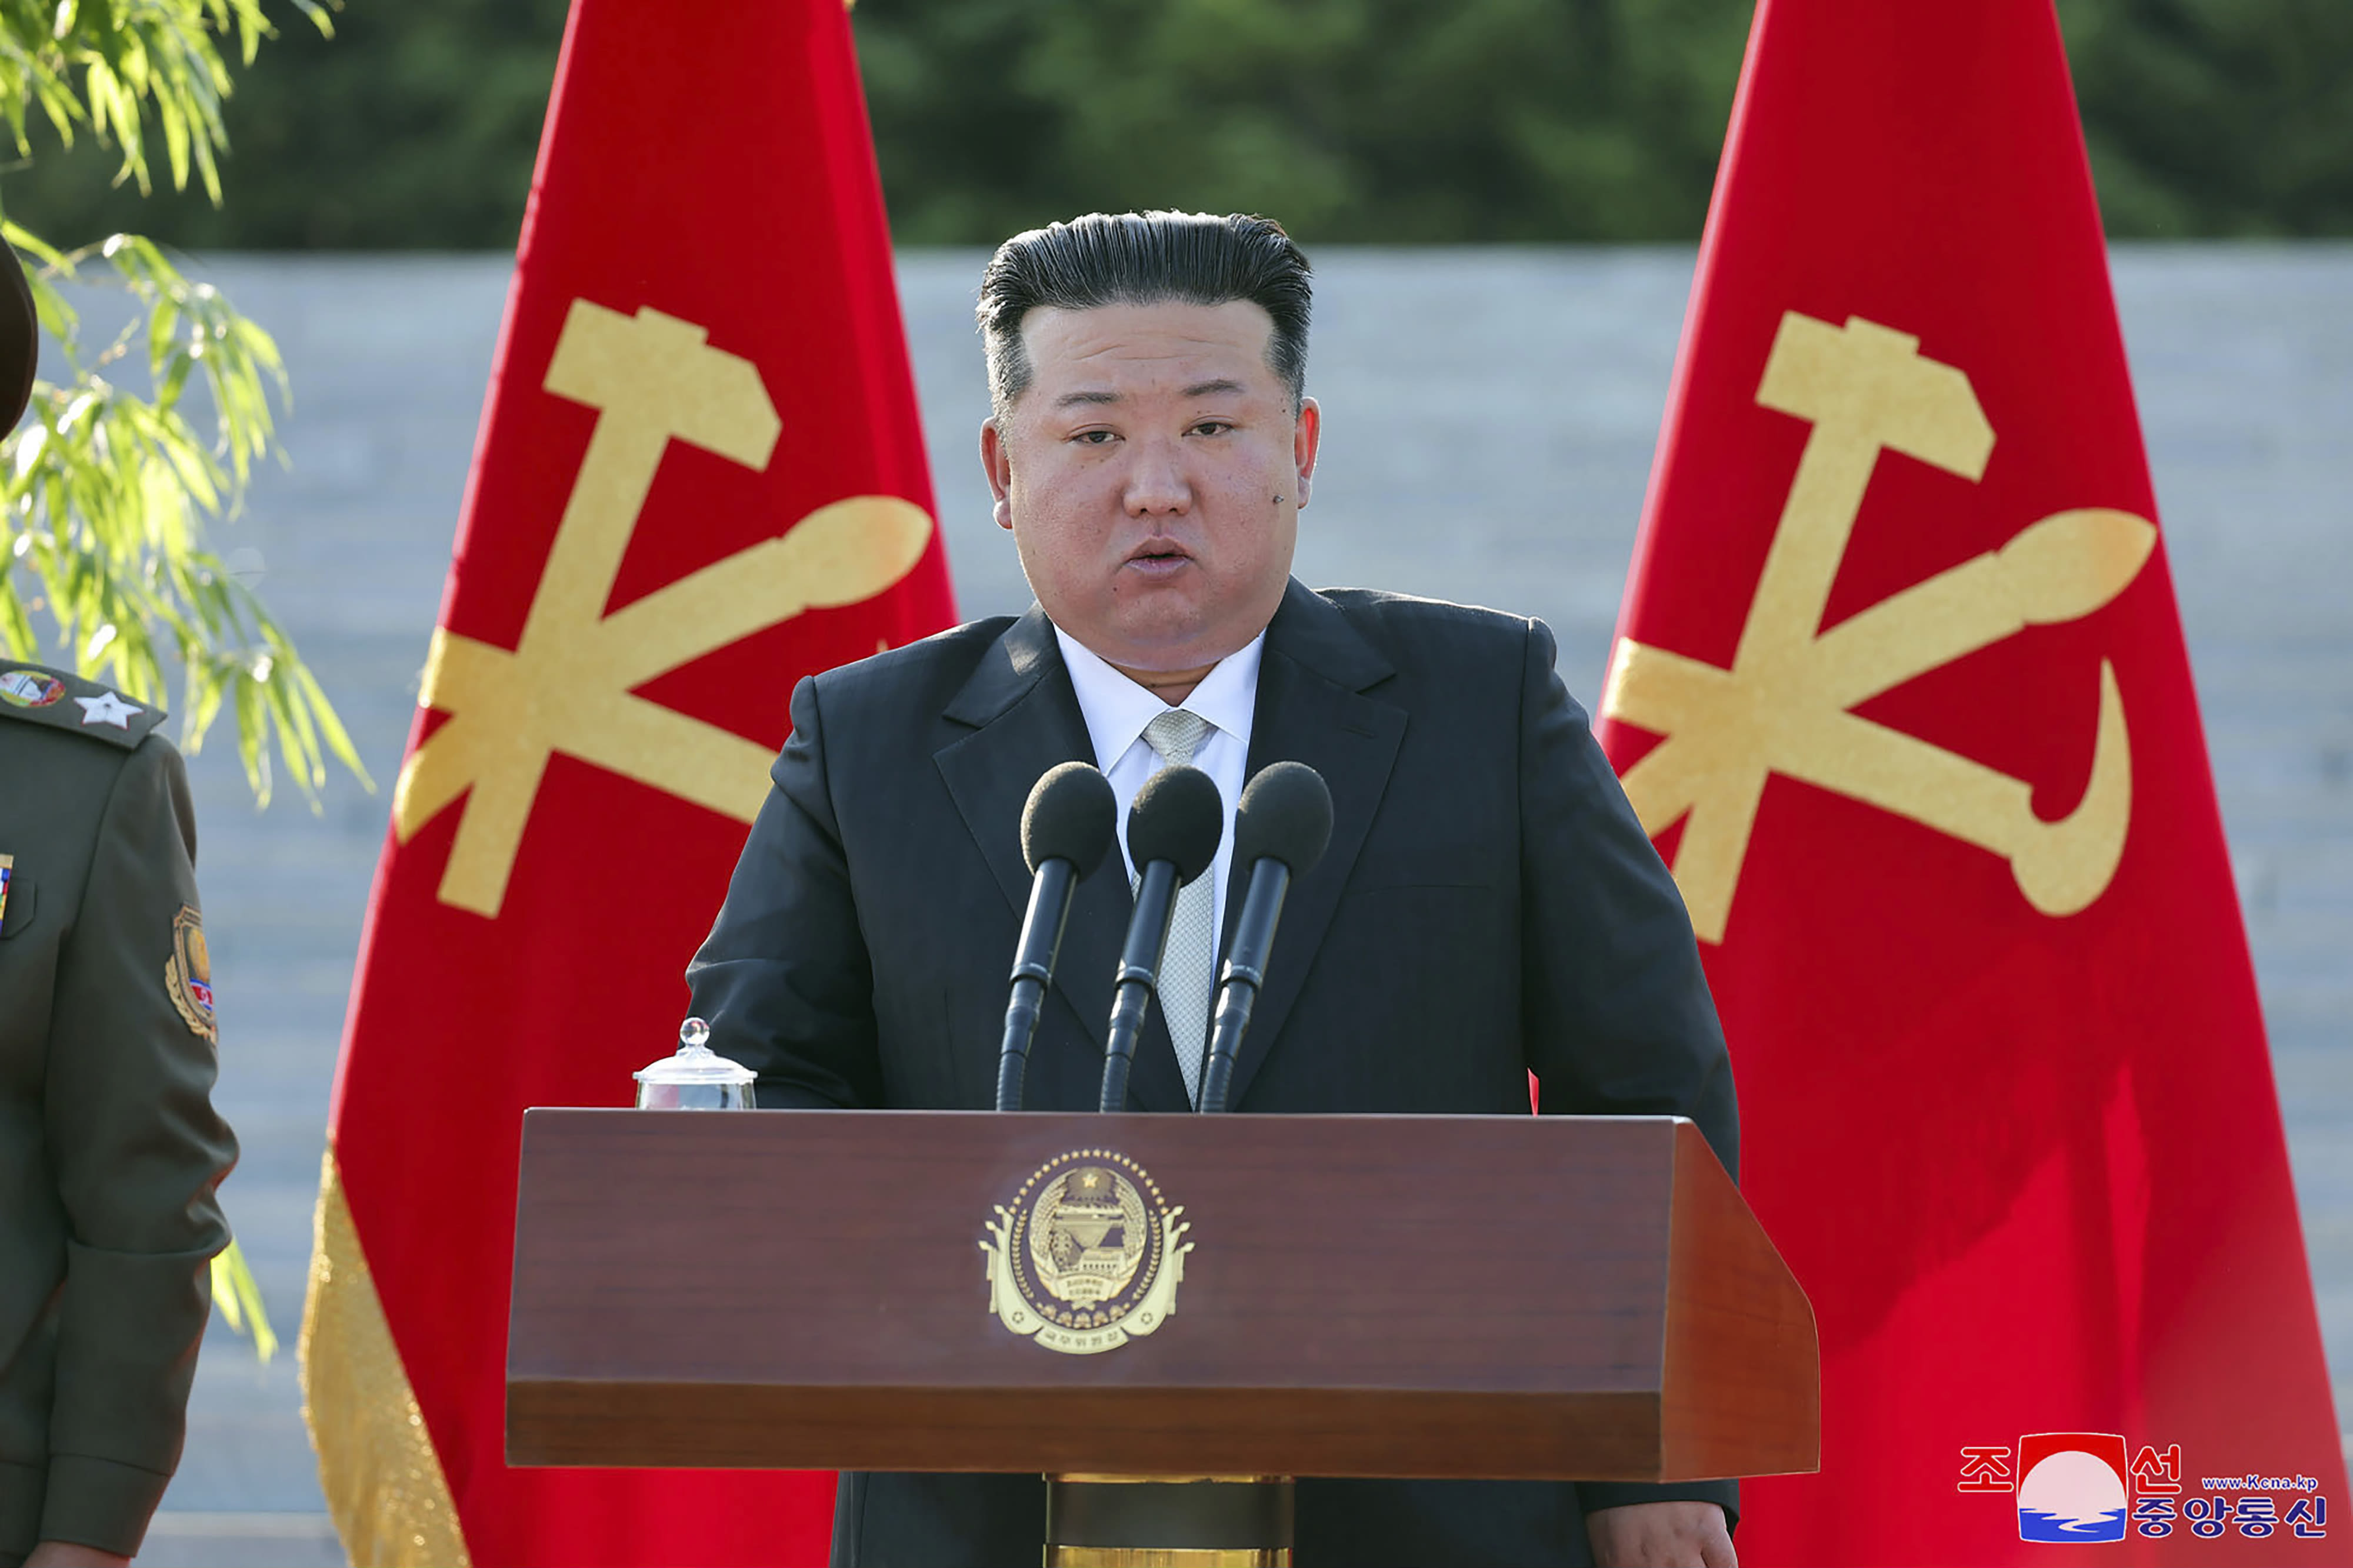 North Korea's Kim supervises firing drills simulating preemptive attacks on South Korea